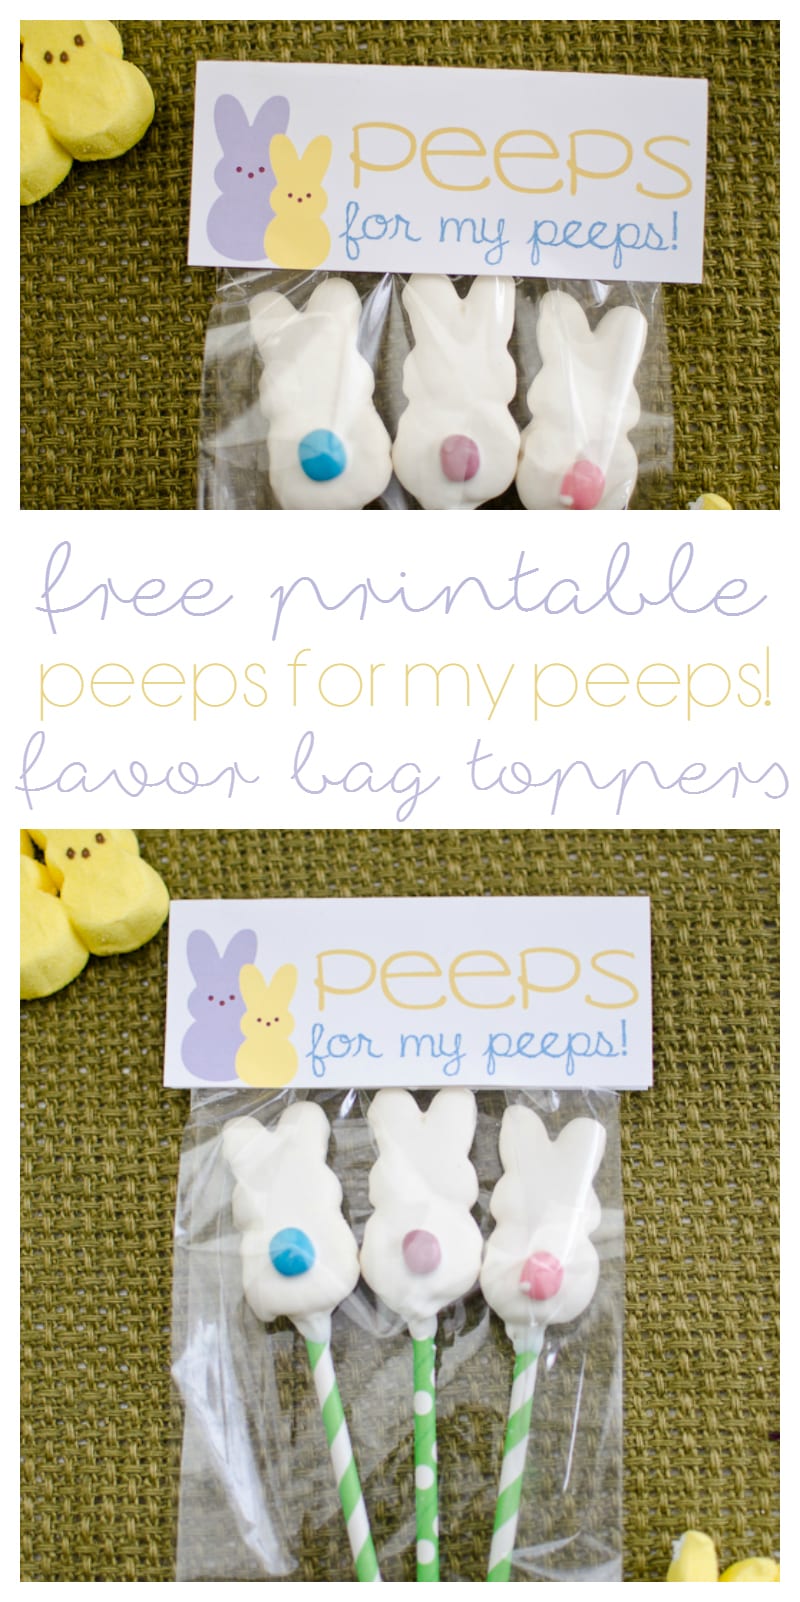 Free Printable Peeps for my Peeps! Favor Bag Topper